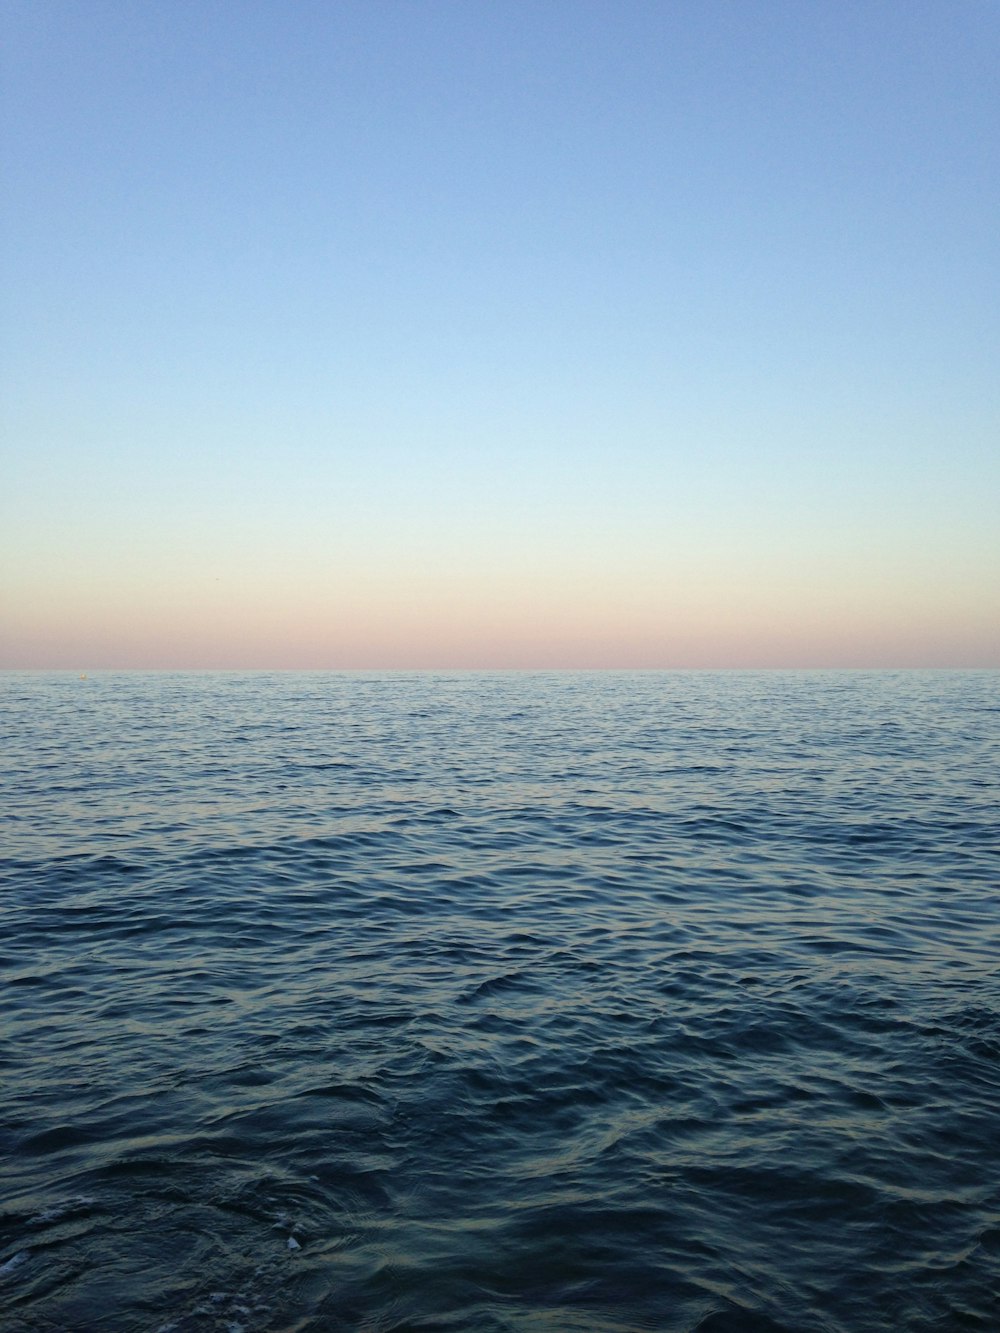 ocean near blue sky at daytime